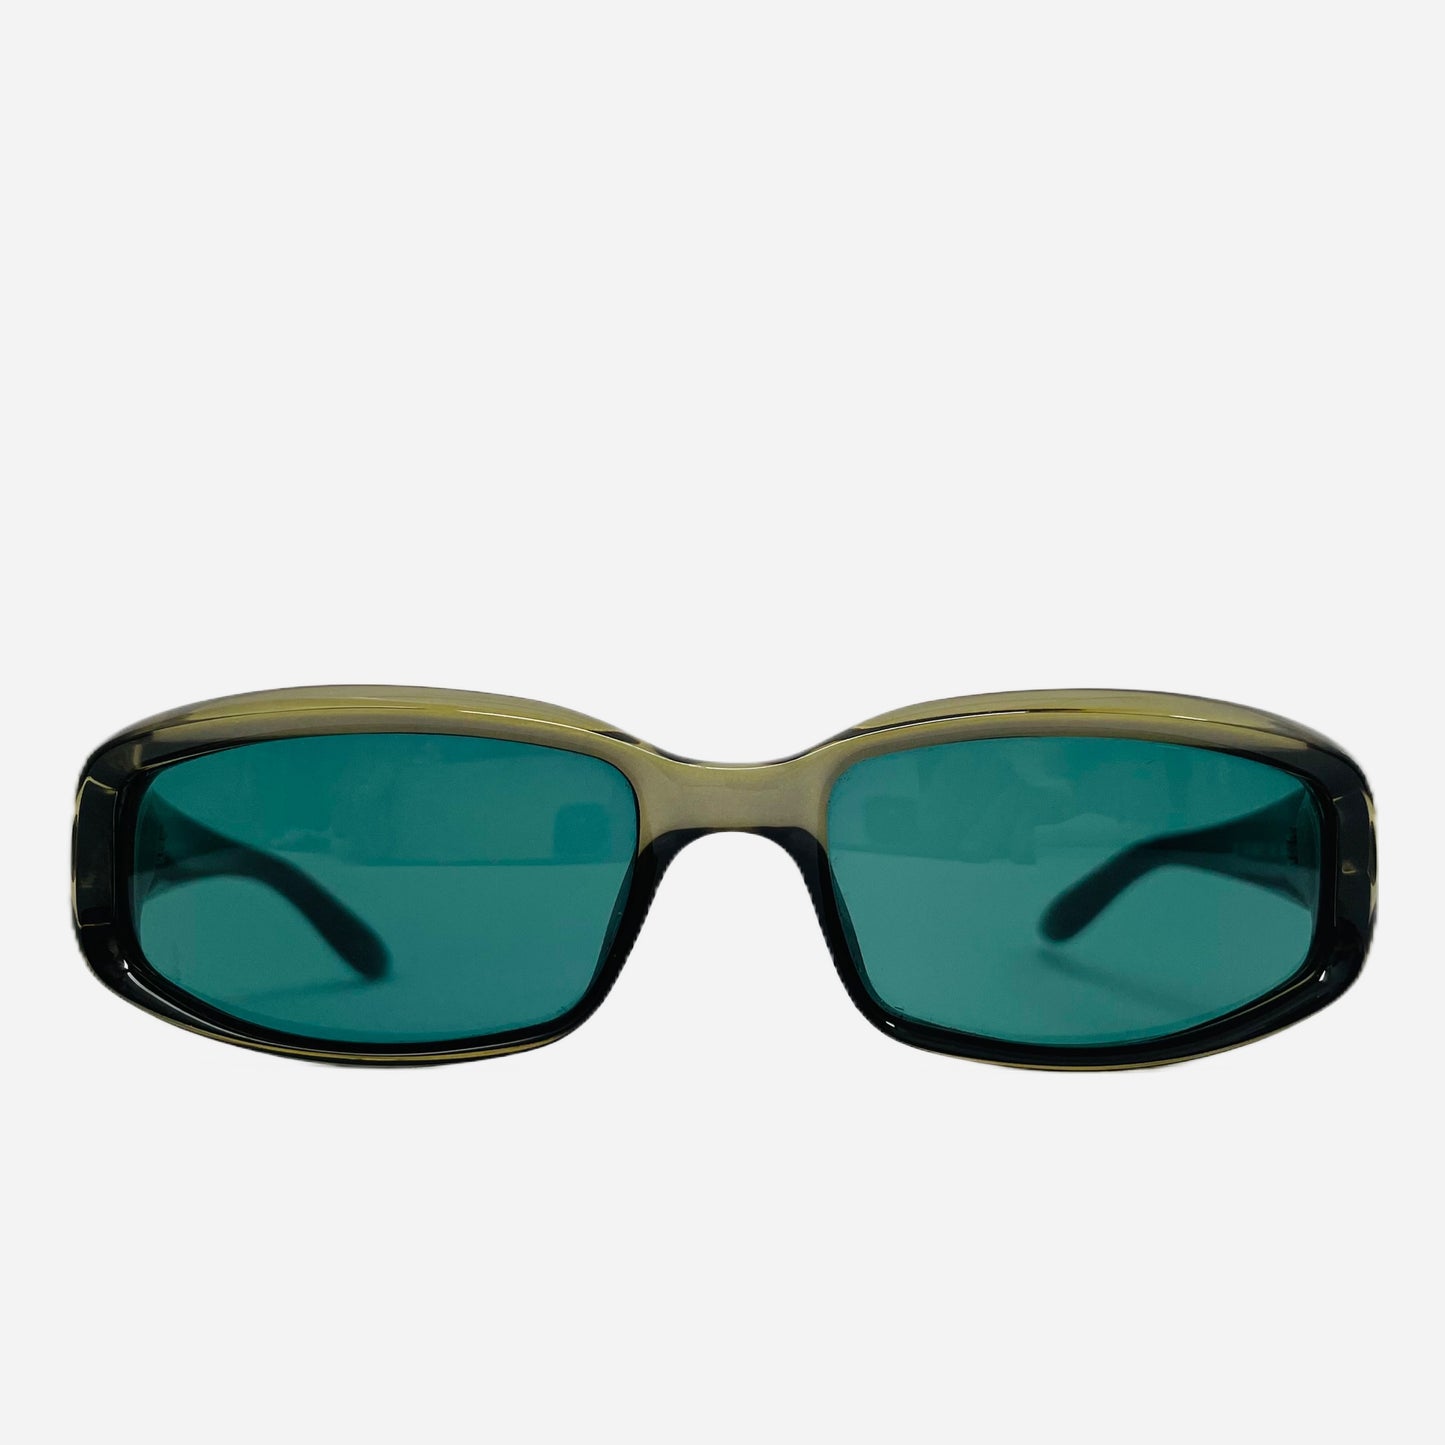 Vintage-Gucci-Sunglasses-Sonnenbrille-Schnelle-Brille-90s-2454-_S-The-Seekers